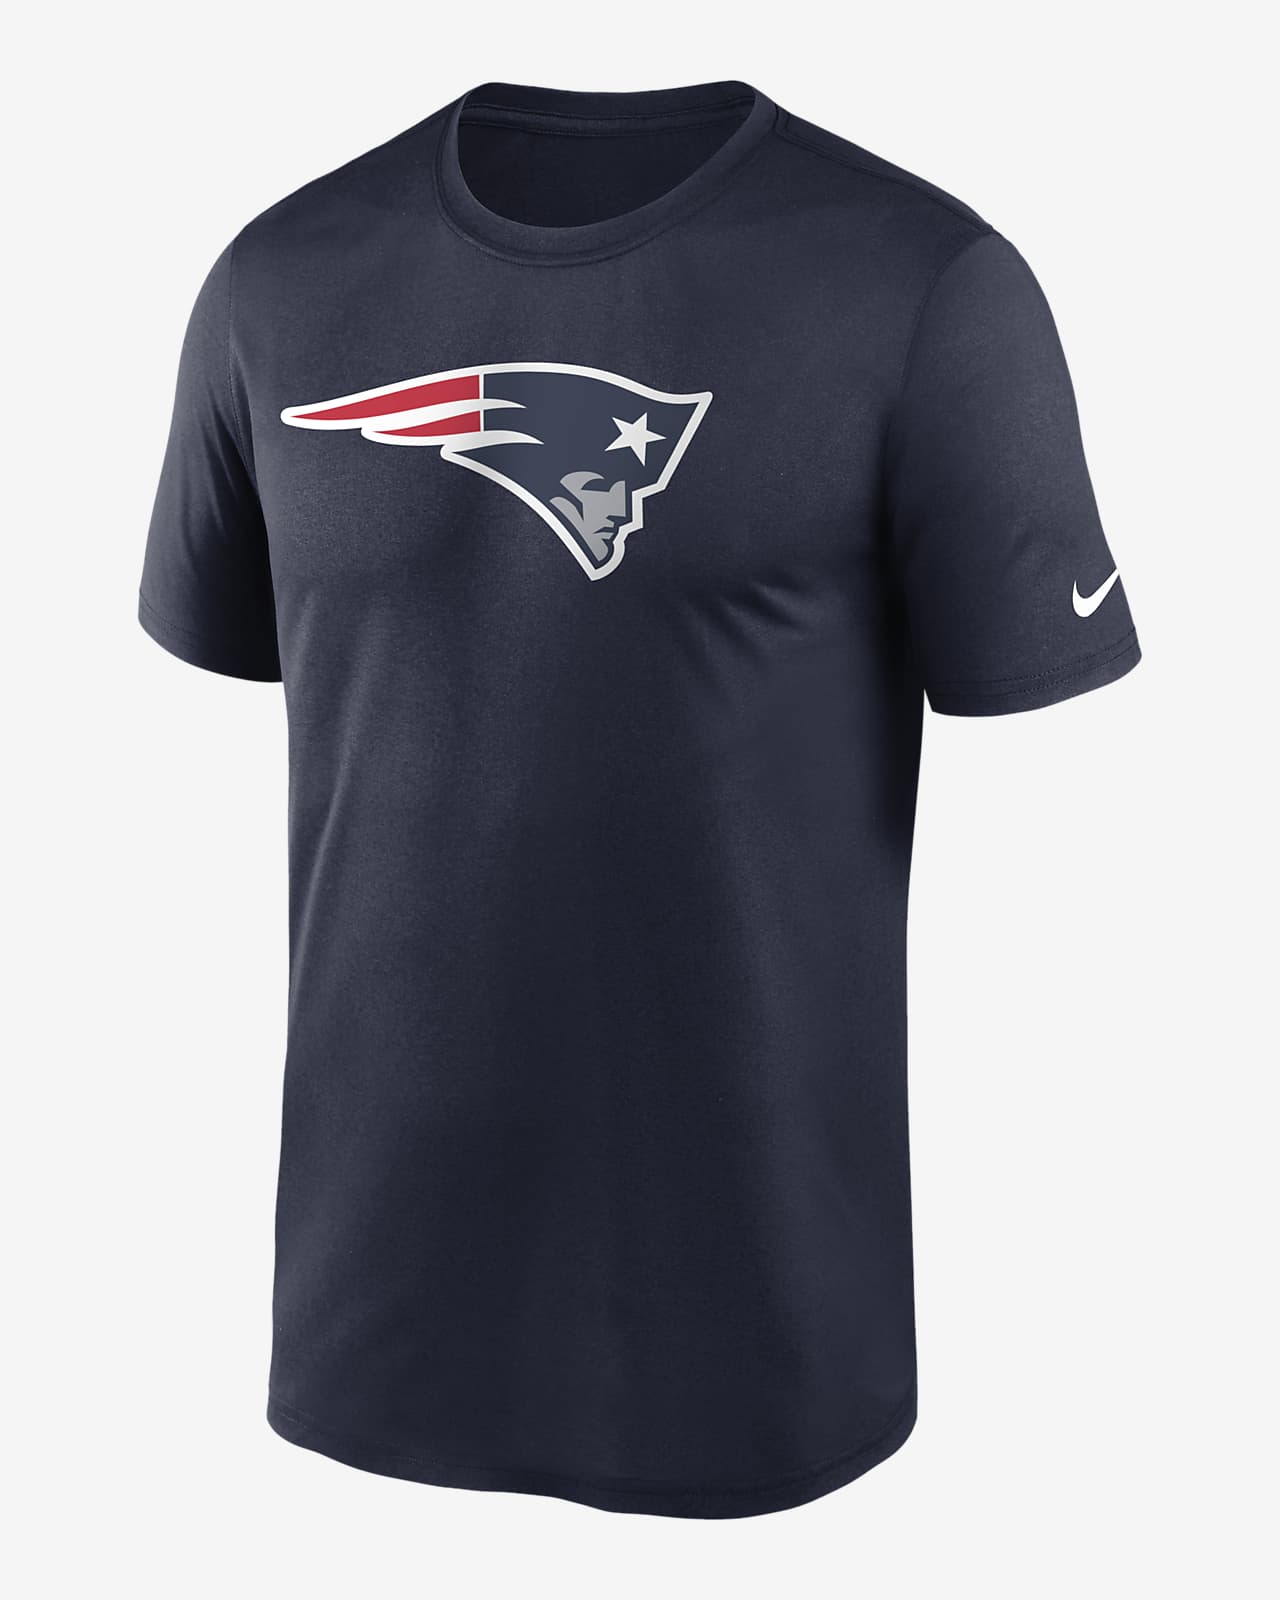 Nike Dri-FIT Logo Legend (NFL New England Patriots) Men's T-Shirt